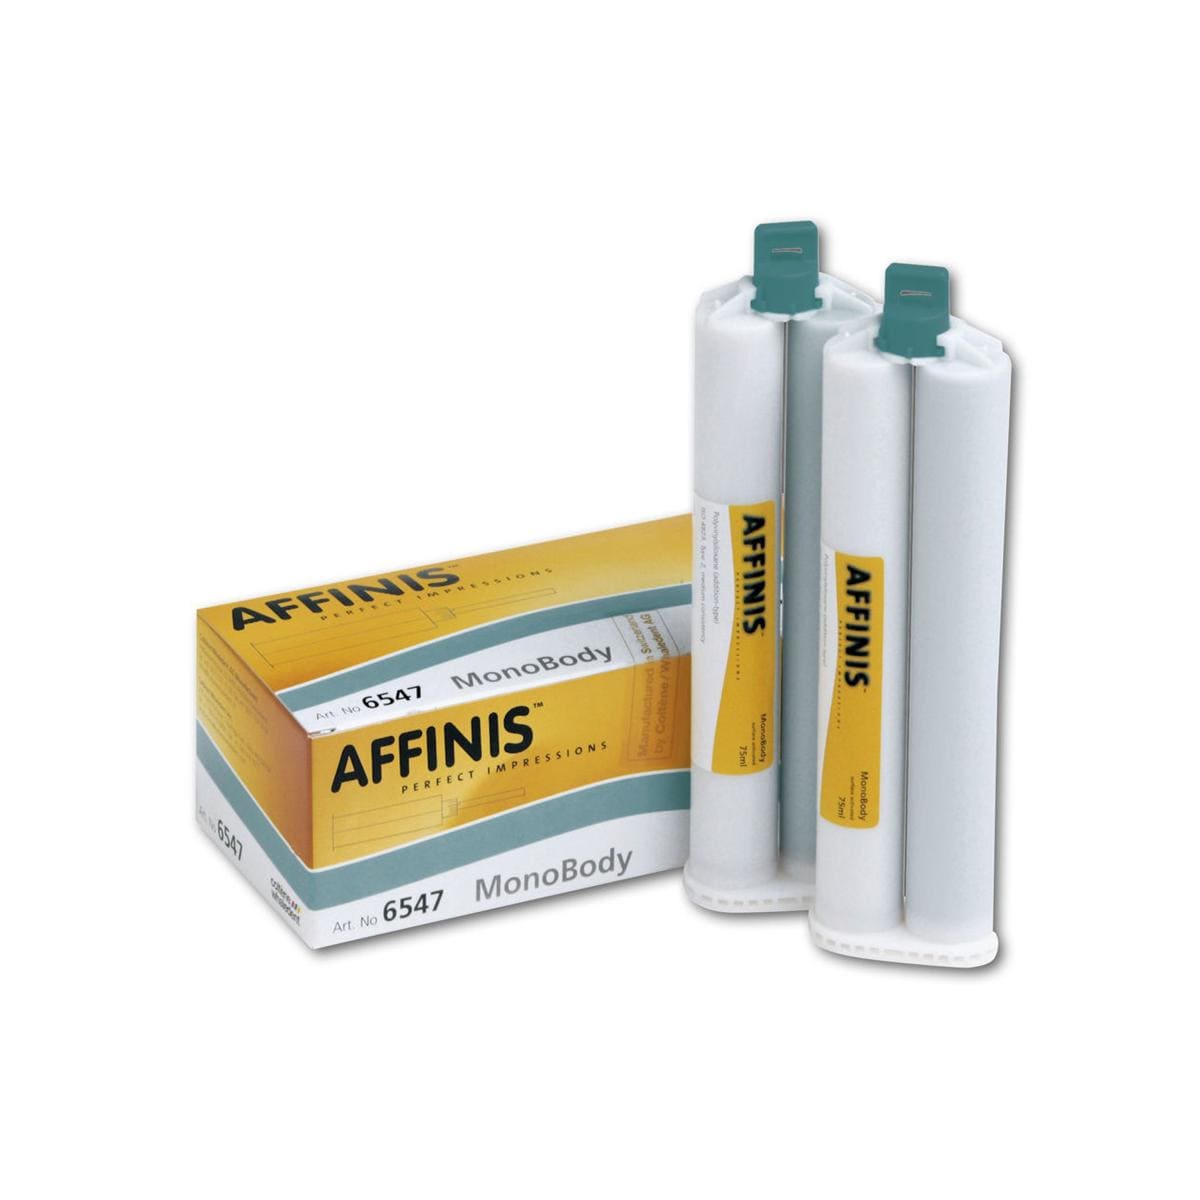 Affinis System - Mono Body, 2x 75 ml en 8 mengtips turquoise